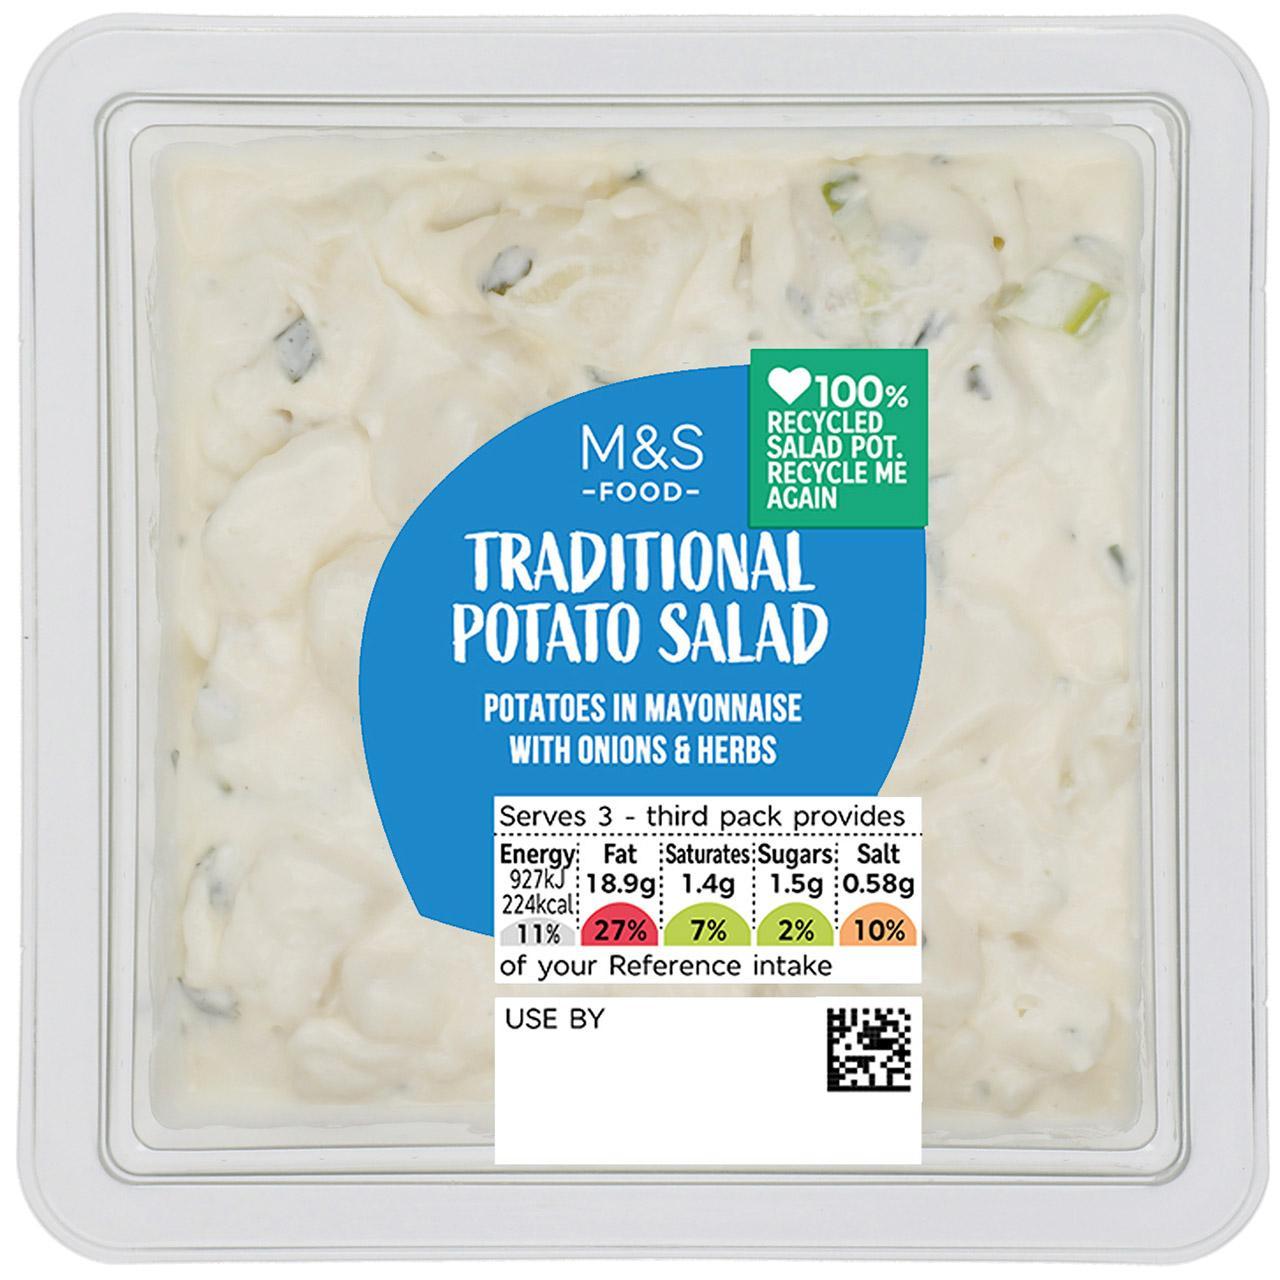 M&S Traditional Potato Salad